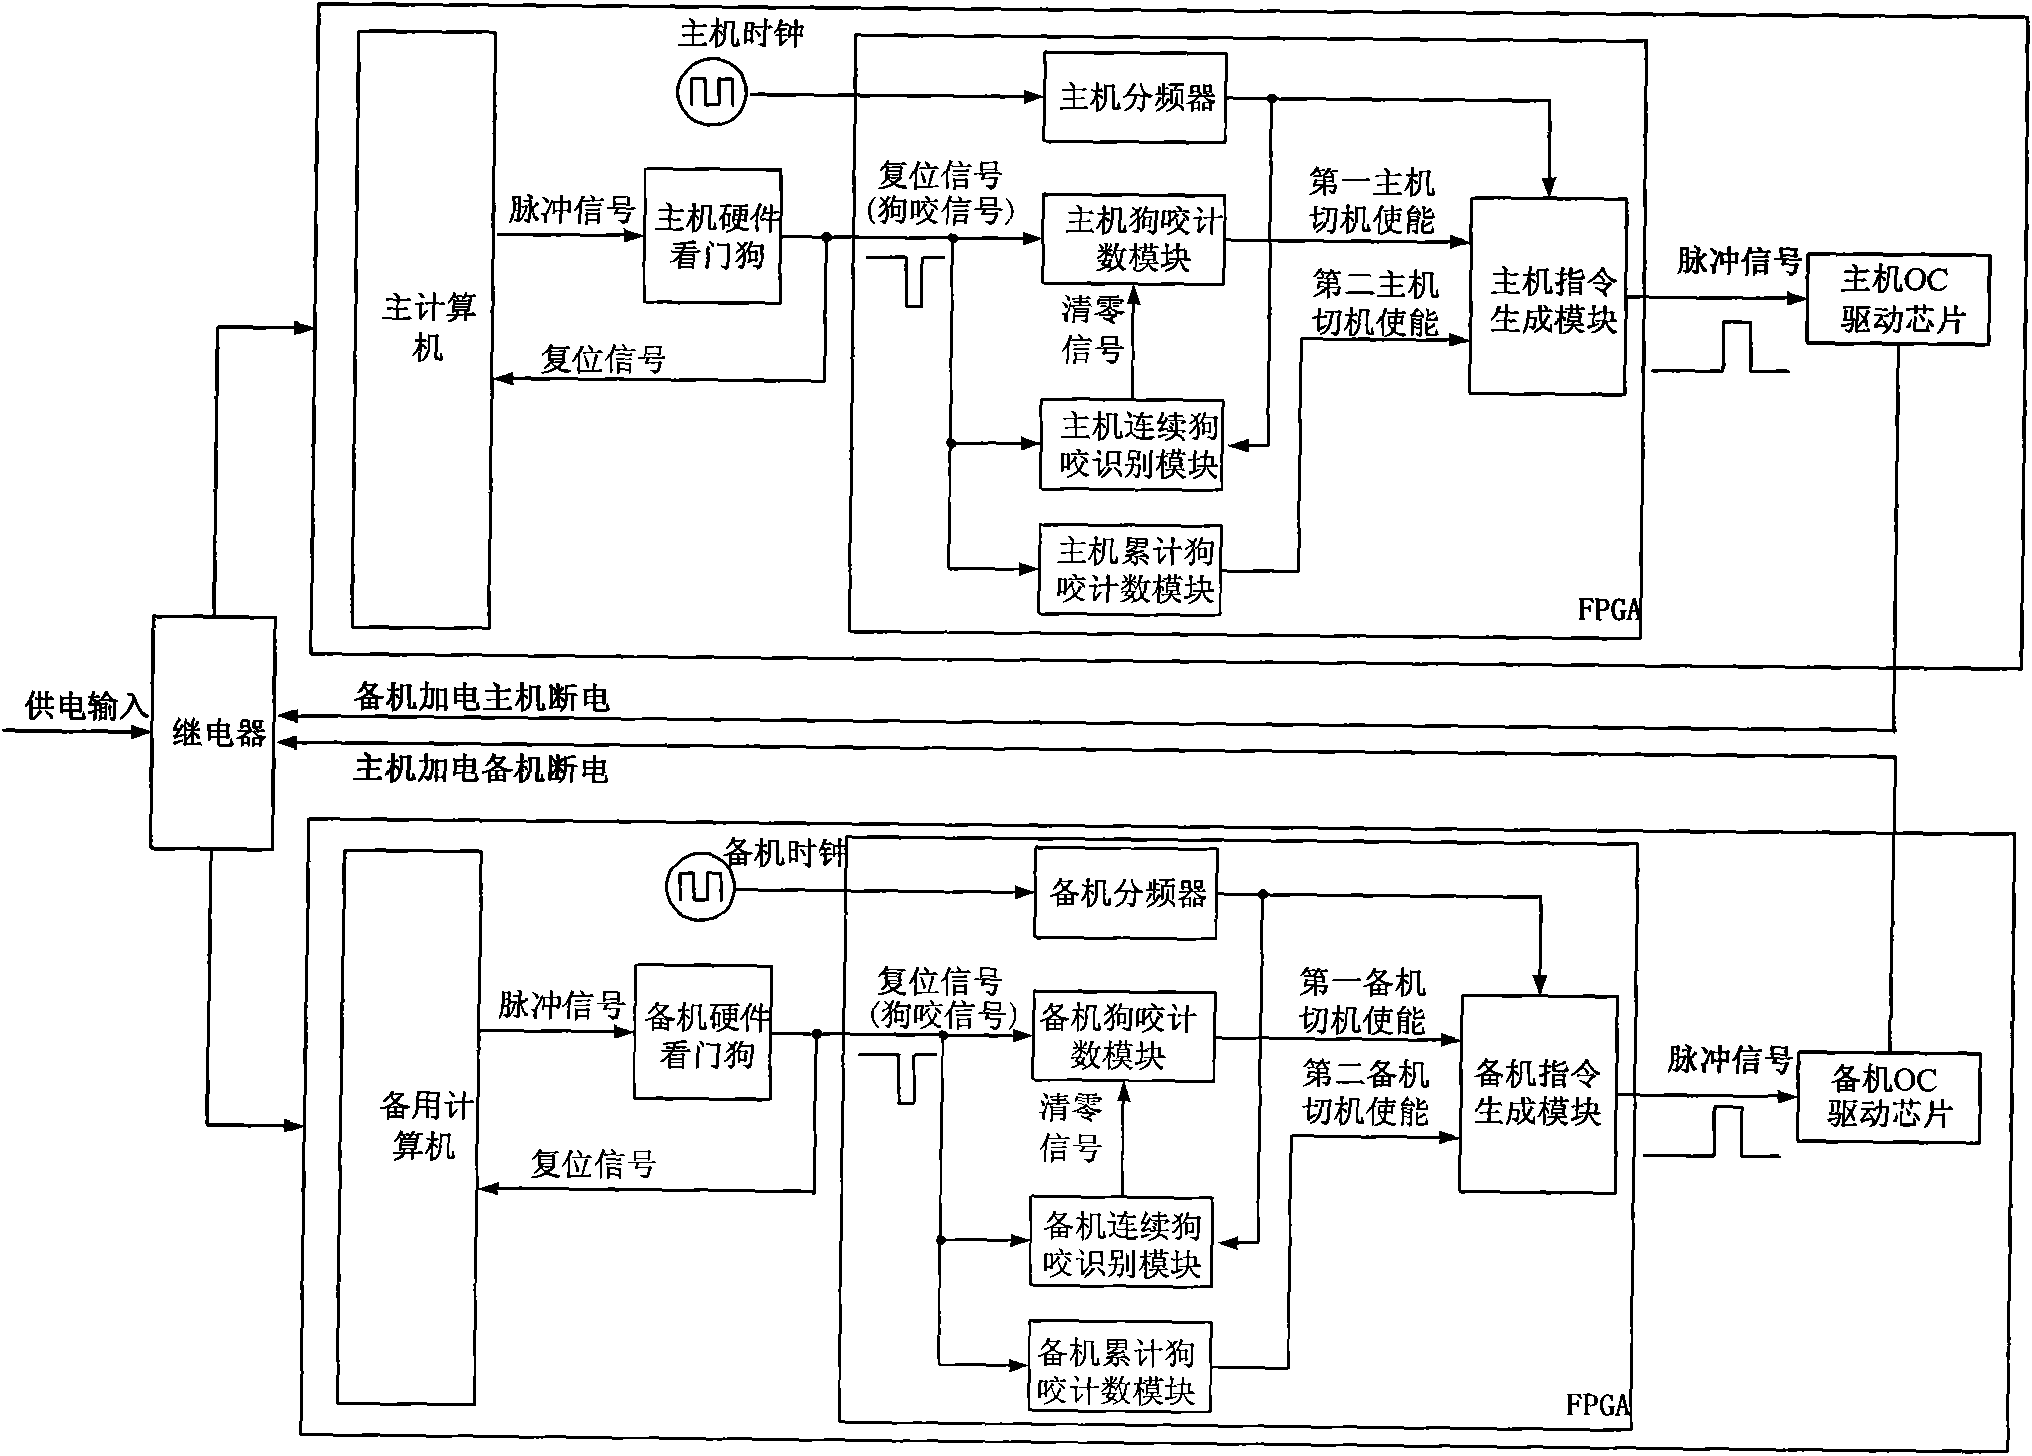 Satellite-borne computer autonomously computer switching system based on field programmable gata array (FPGA)